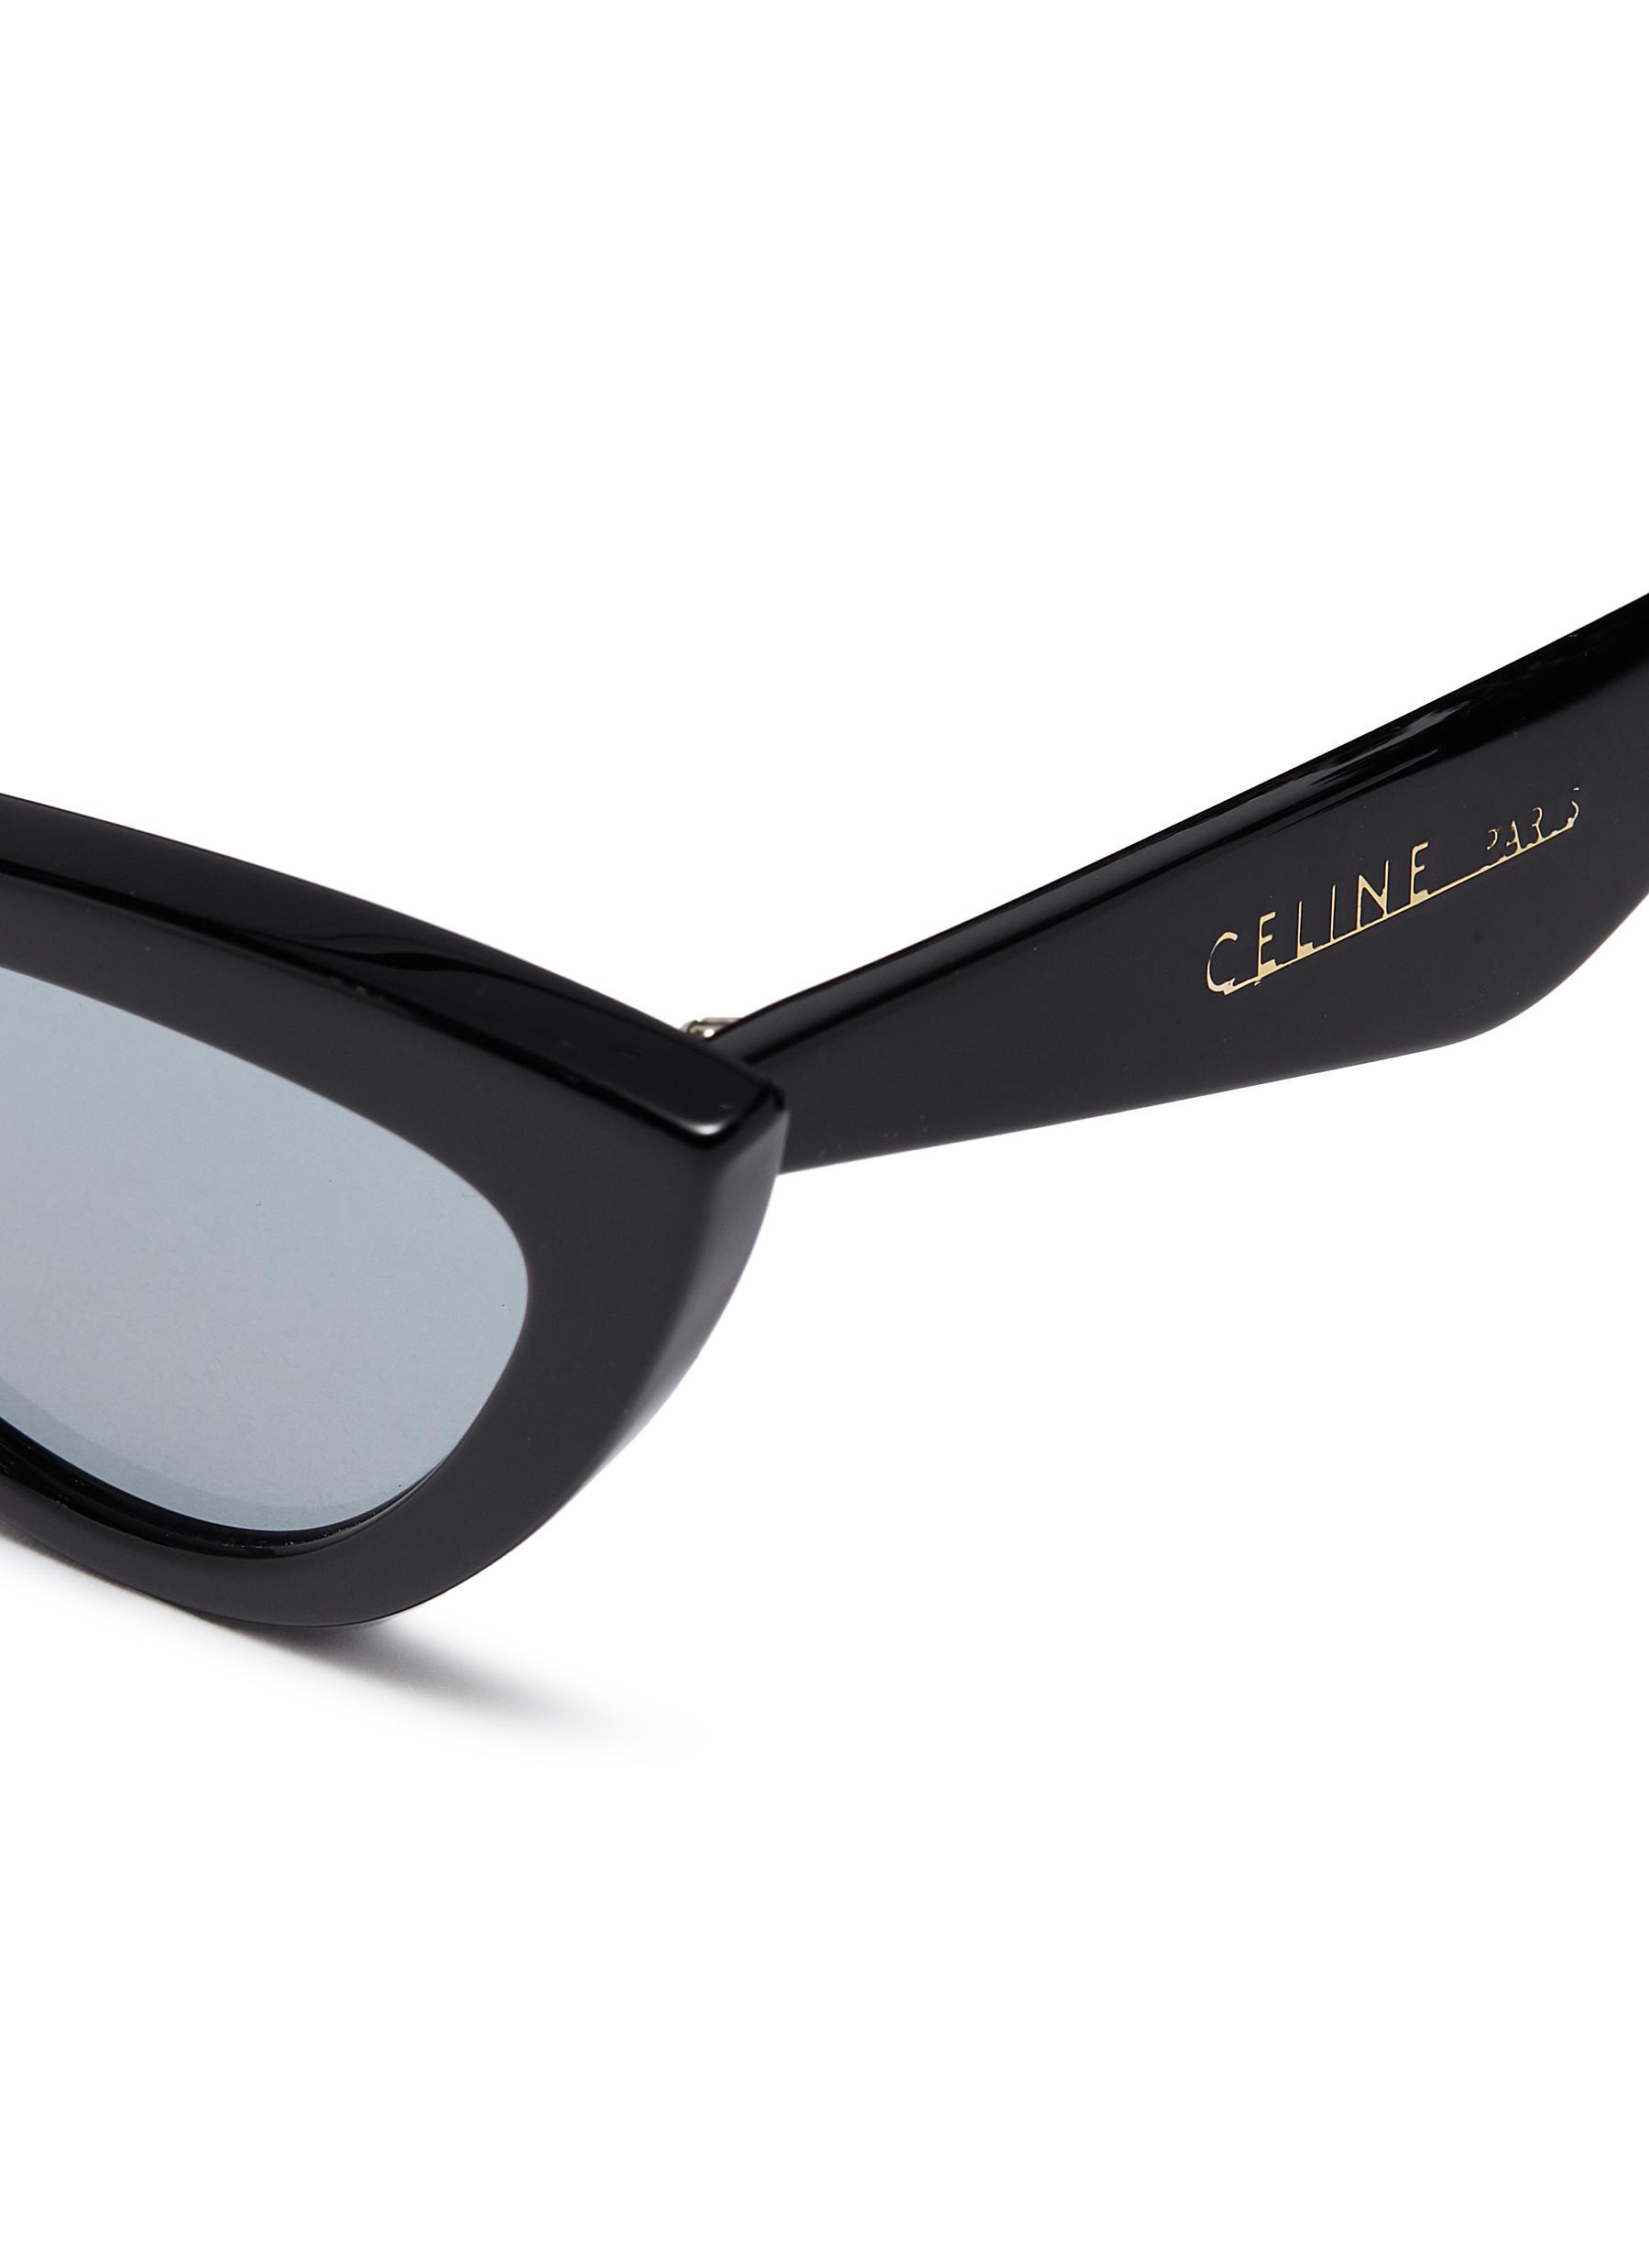 Celine Mirror Acetate Cat Eye Sunglasses in Black | Lyst